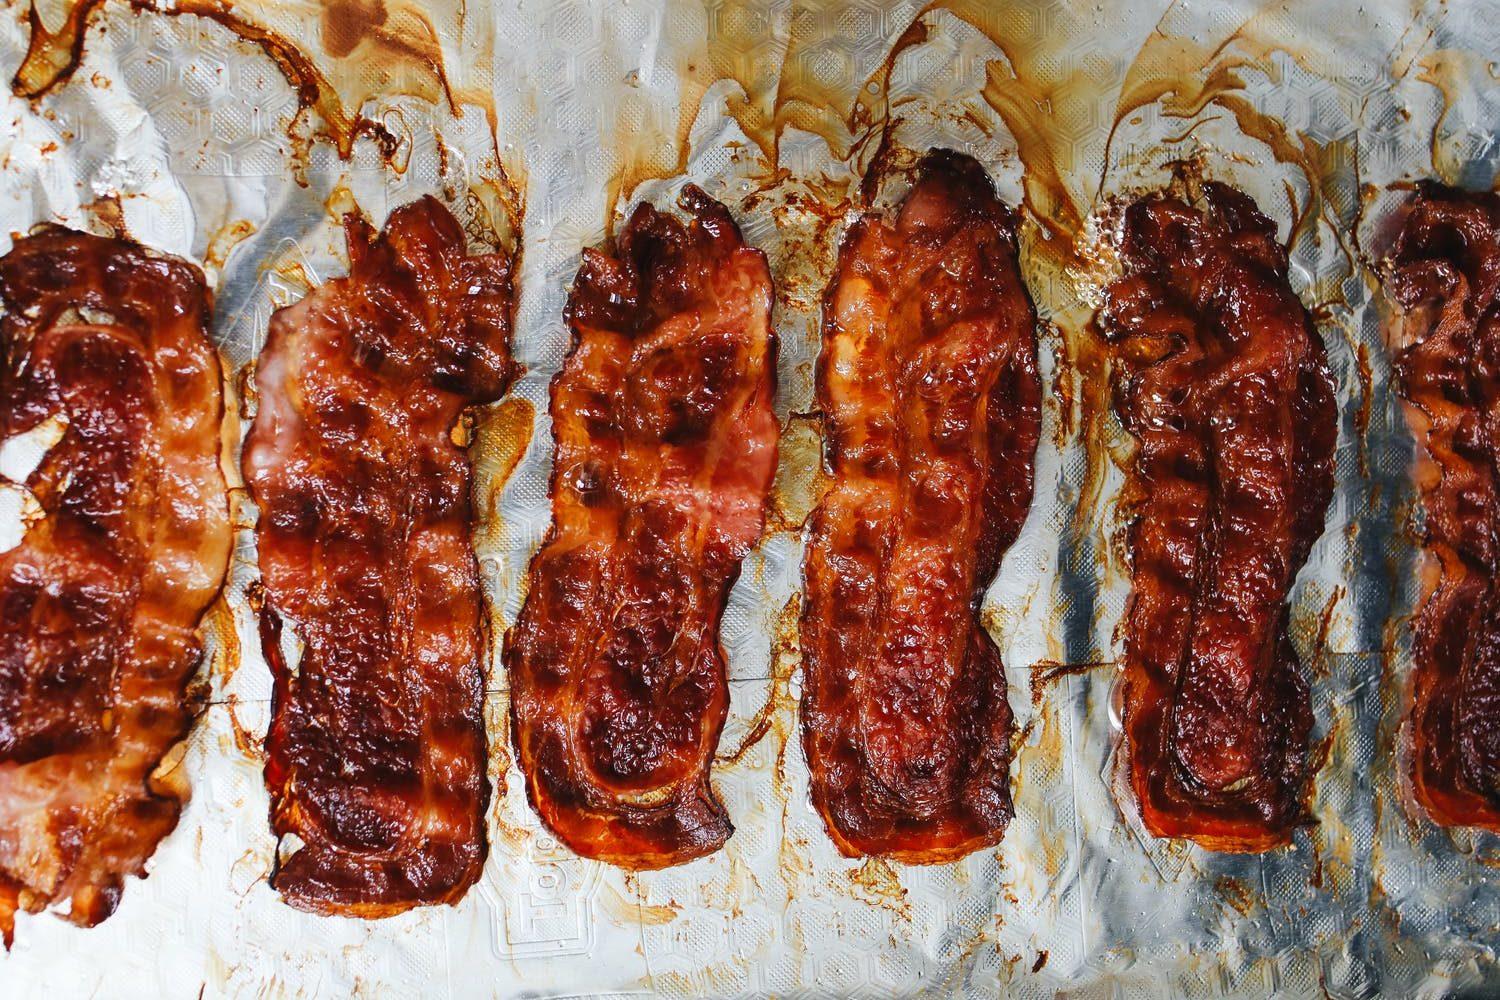 Bulk Bacon